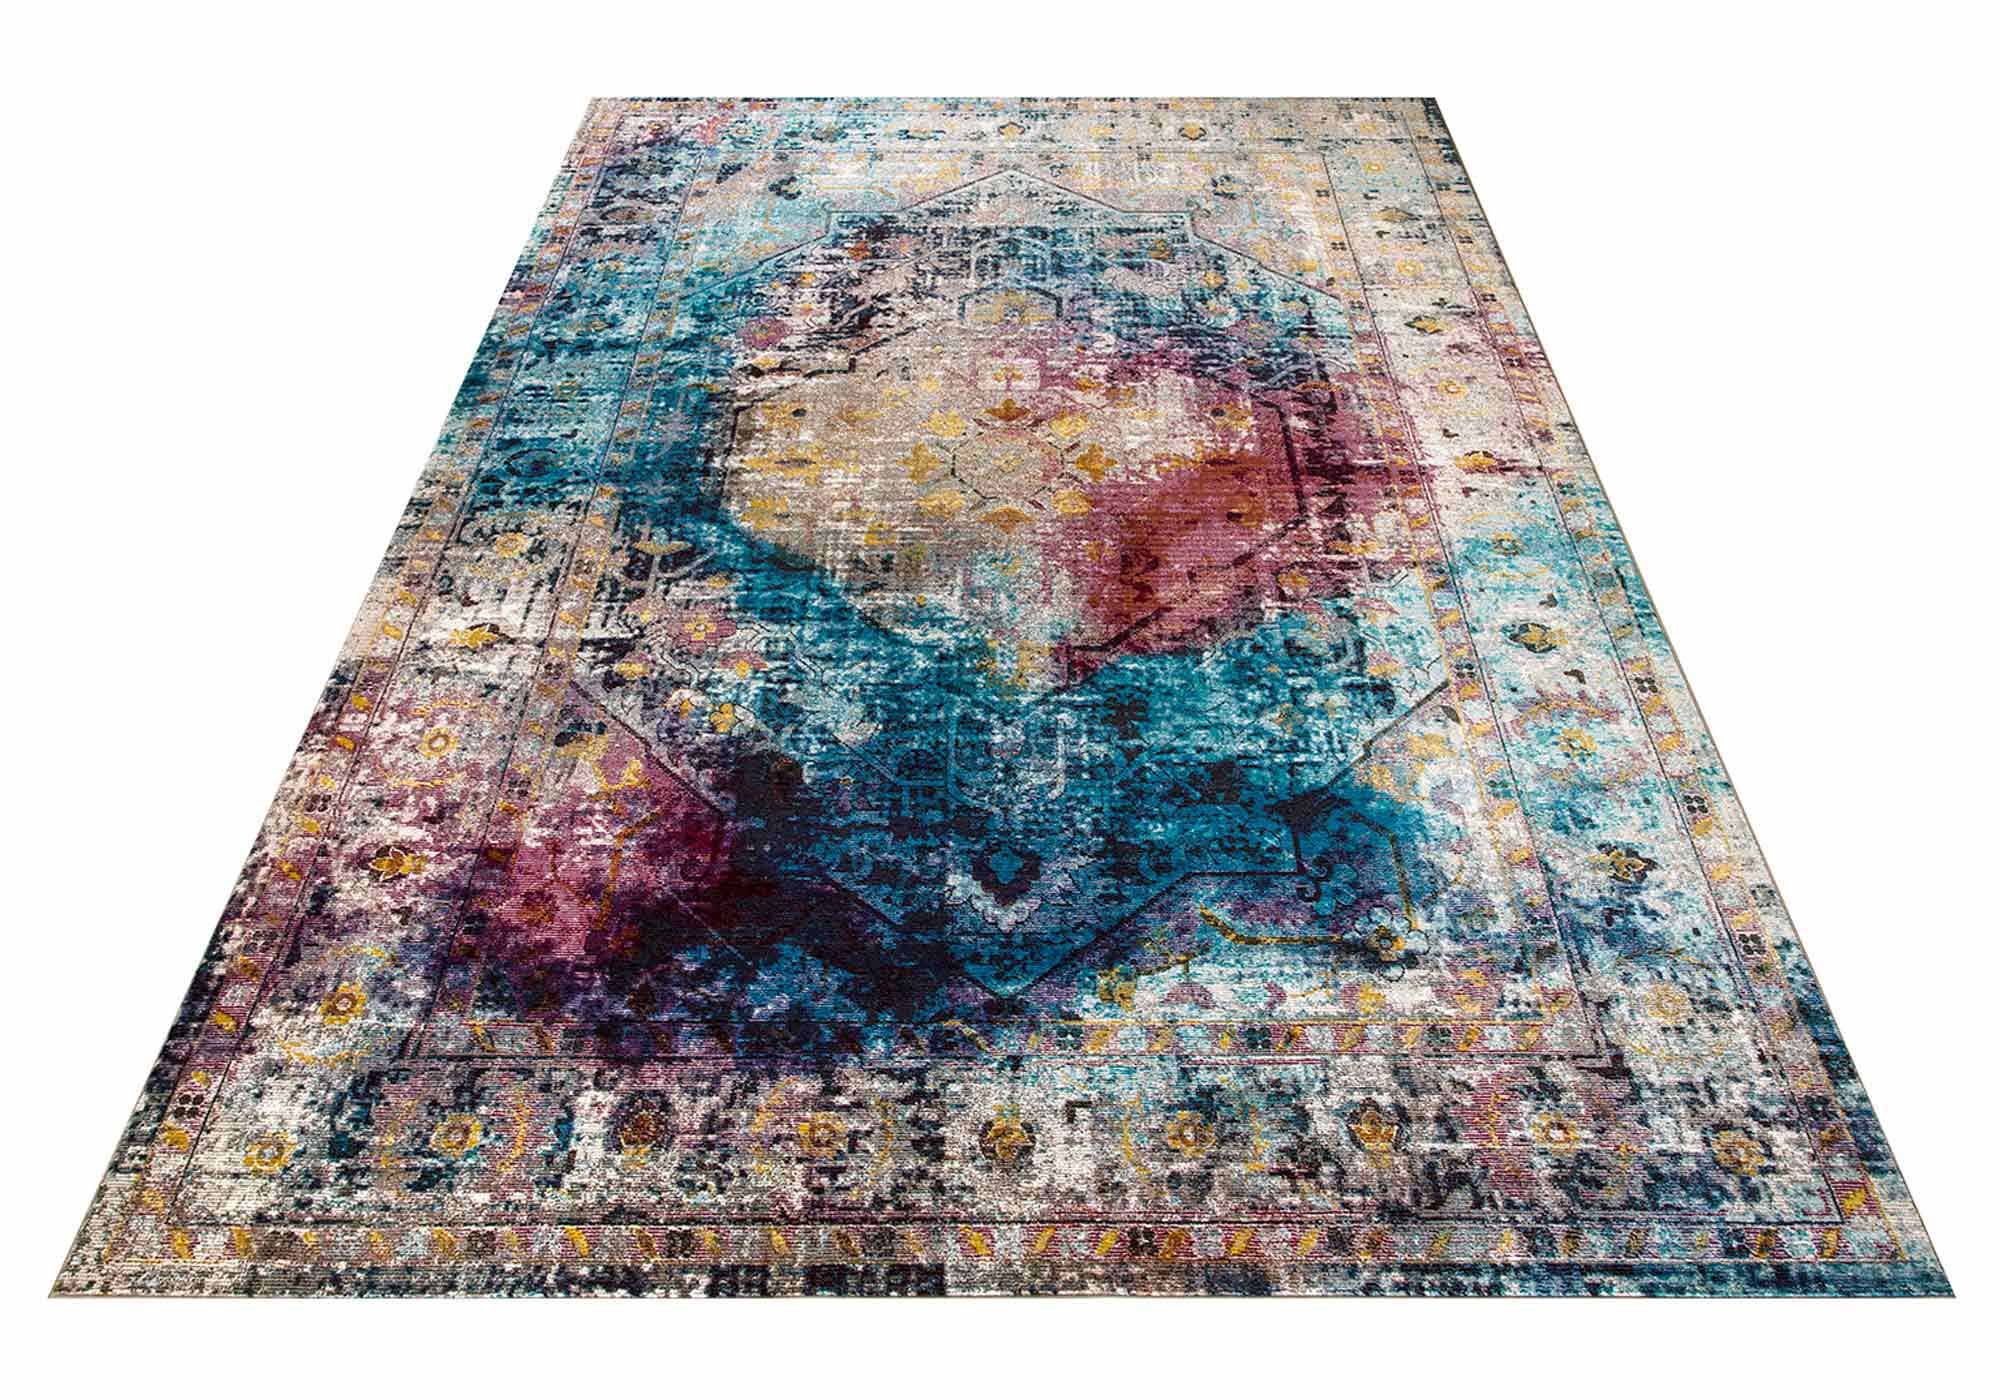 Festival Teppich 200 x 290 cm - mehrfarbig - 6 mm Höhe - Picasso 602